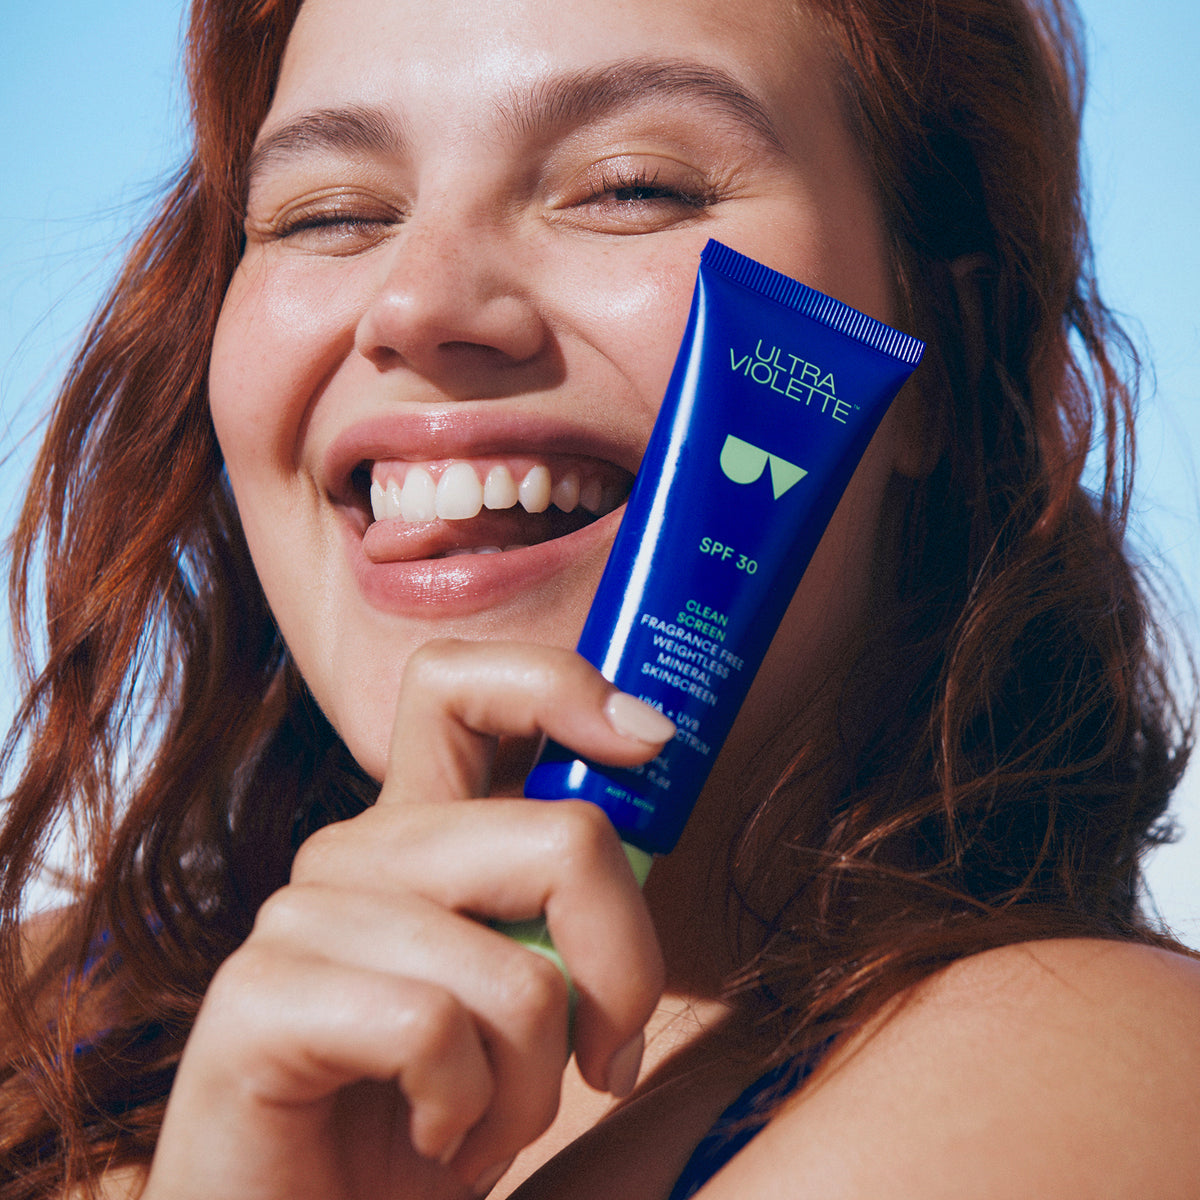 Ultra Violette | Clean Screen Fragrance Free Weightless Sensitive Skinscreen SPF30